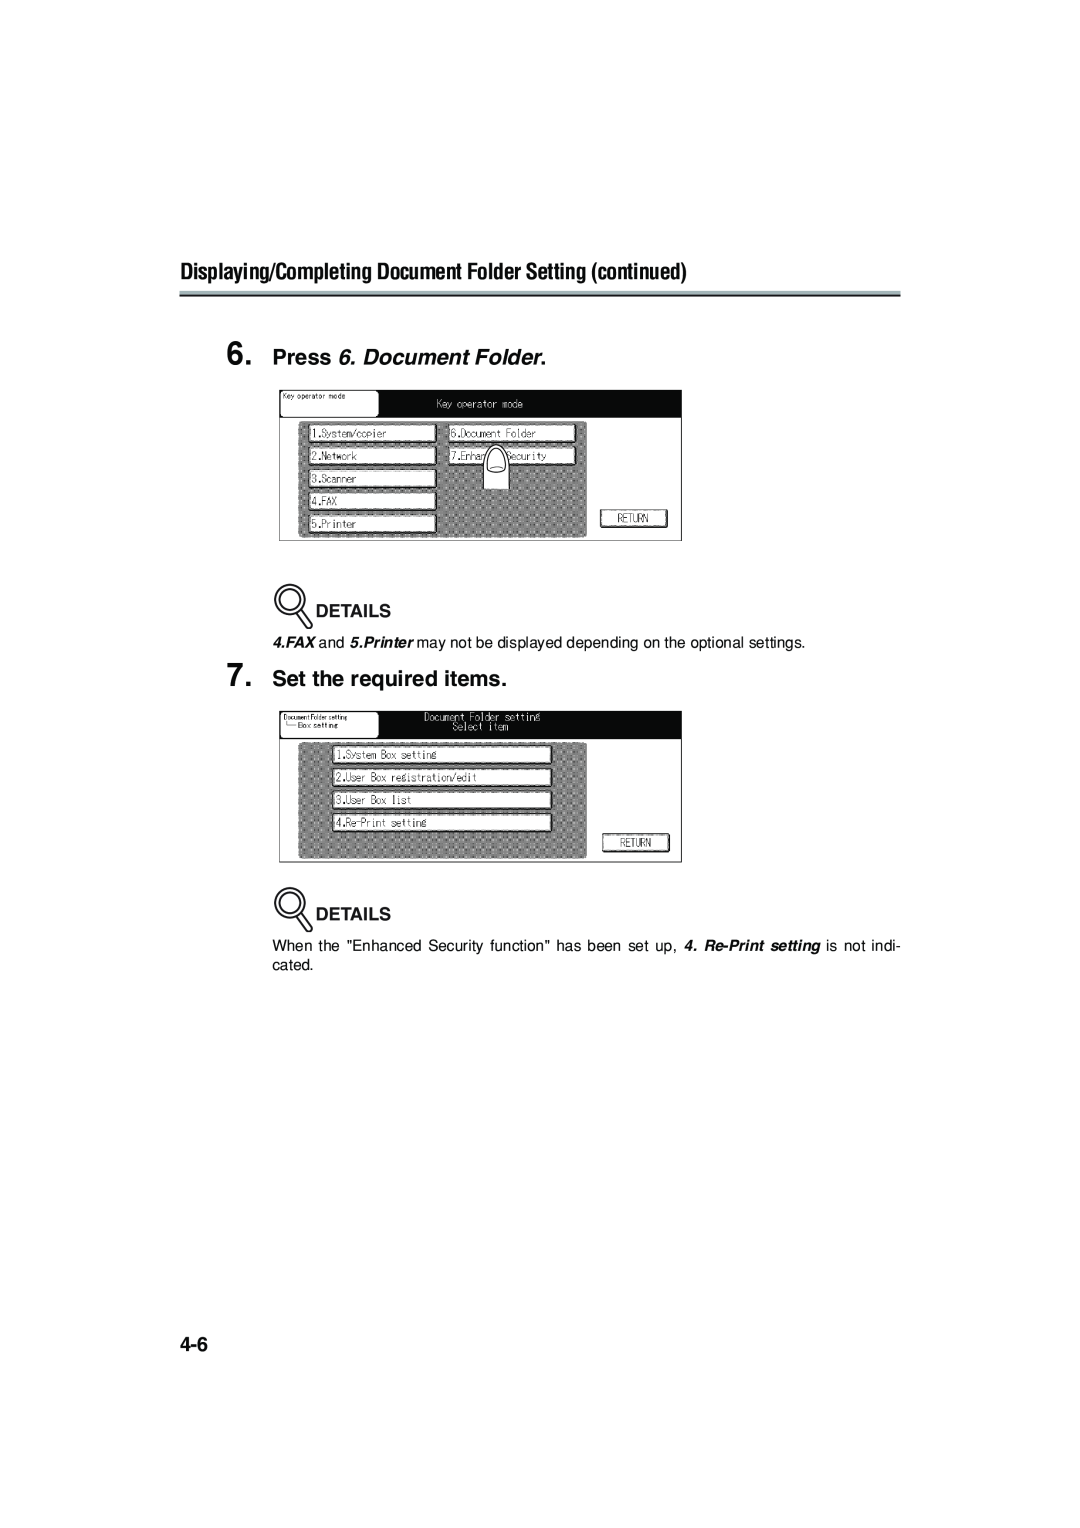 Konica Minolta 7222 manual Press 6. Document Folder, Set the required items, Details 